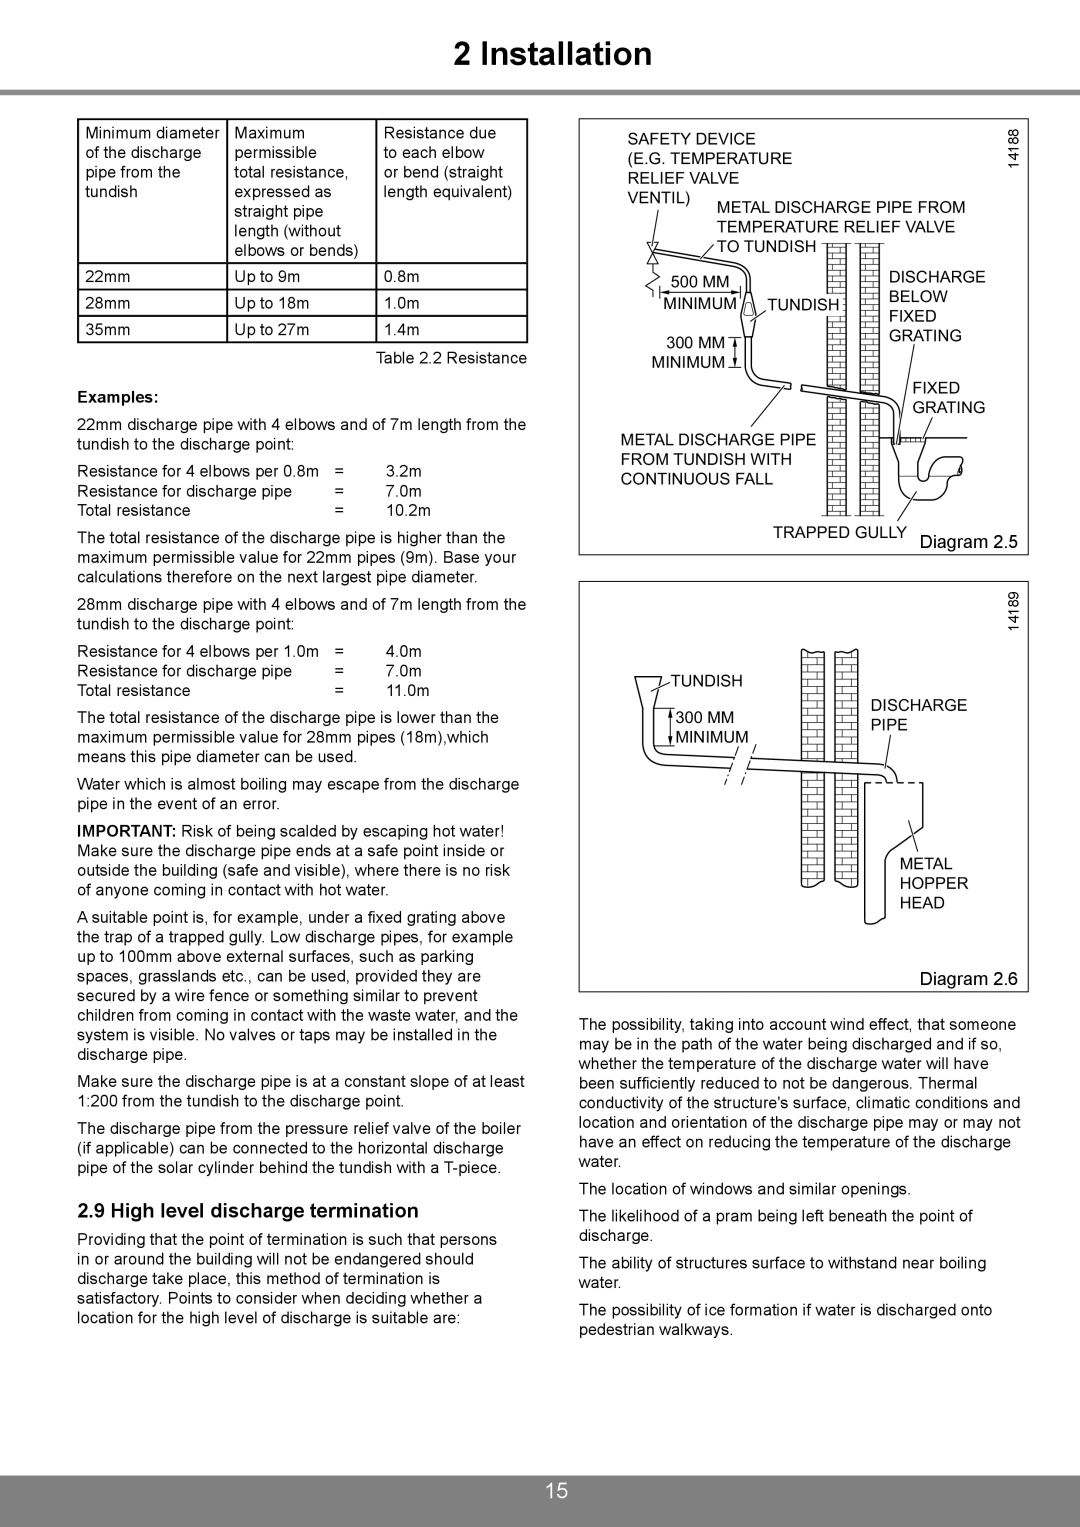 Glowworm Lighting 250 I, 300 I, 200 I manual Installation, High level discharge termination, Examples 